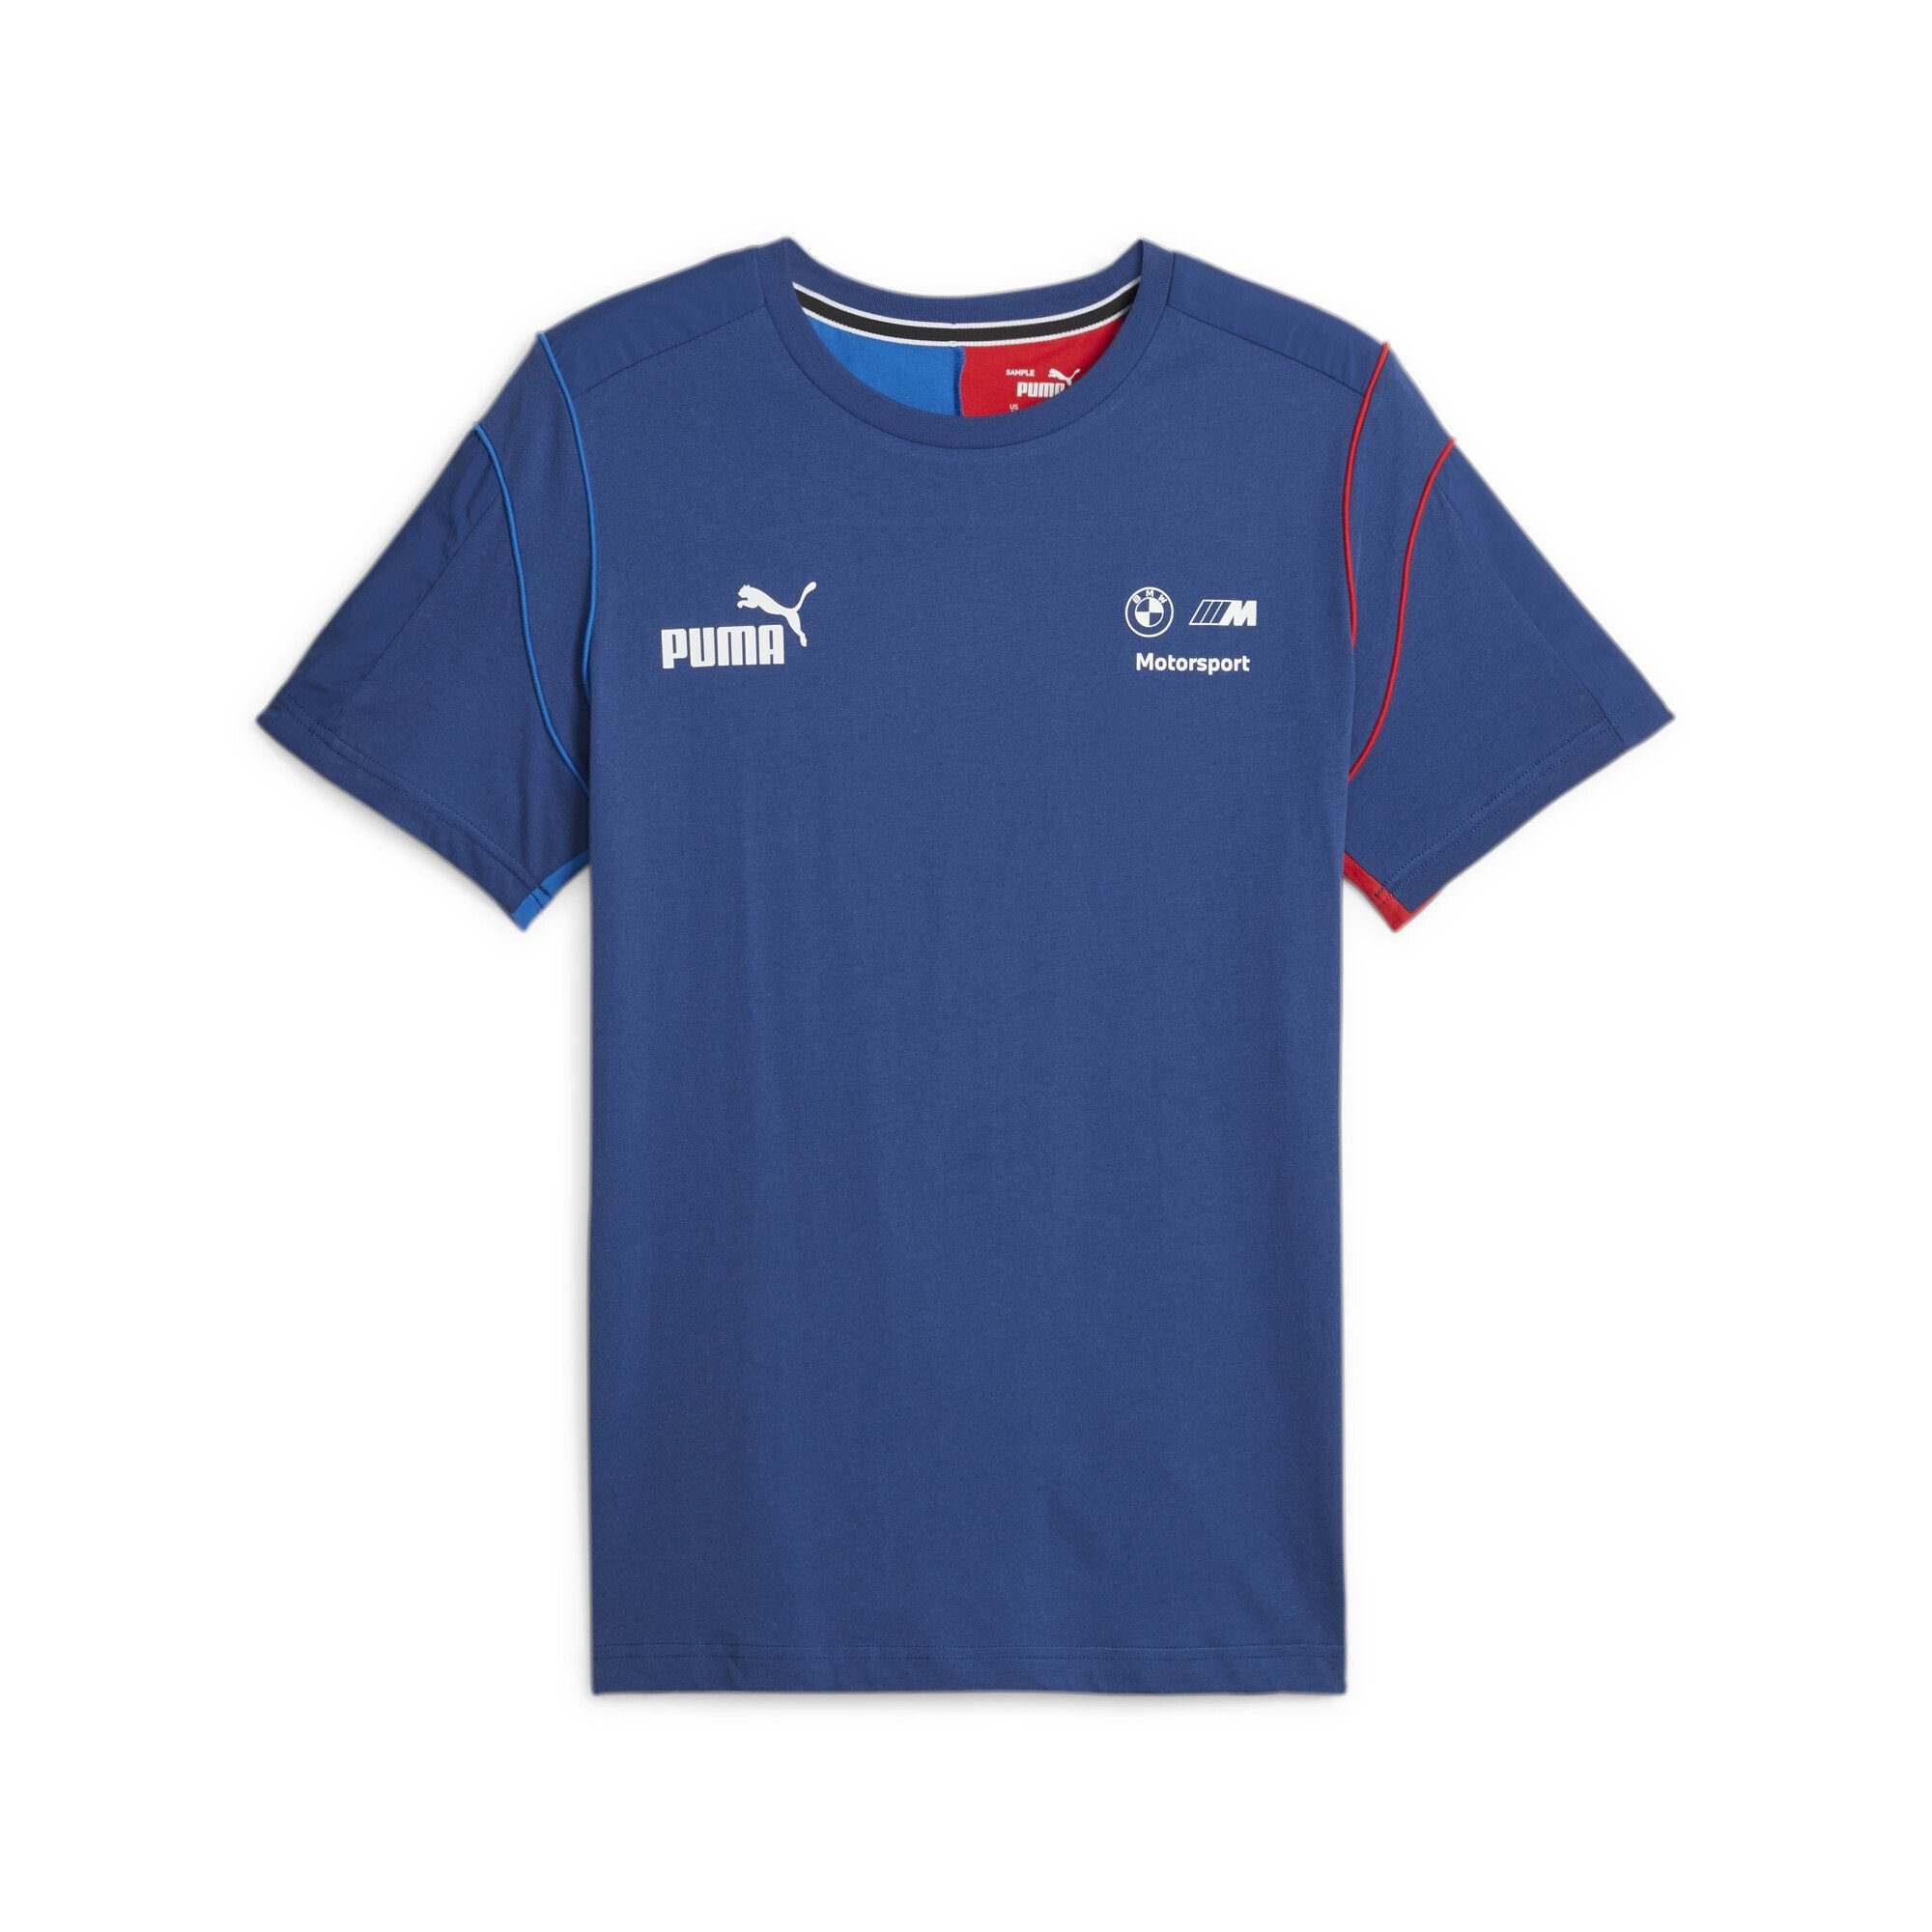 PUMA T-Shirt Blue BMW MT7 Pro Herren T-Shirt Color M M Motorsport